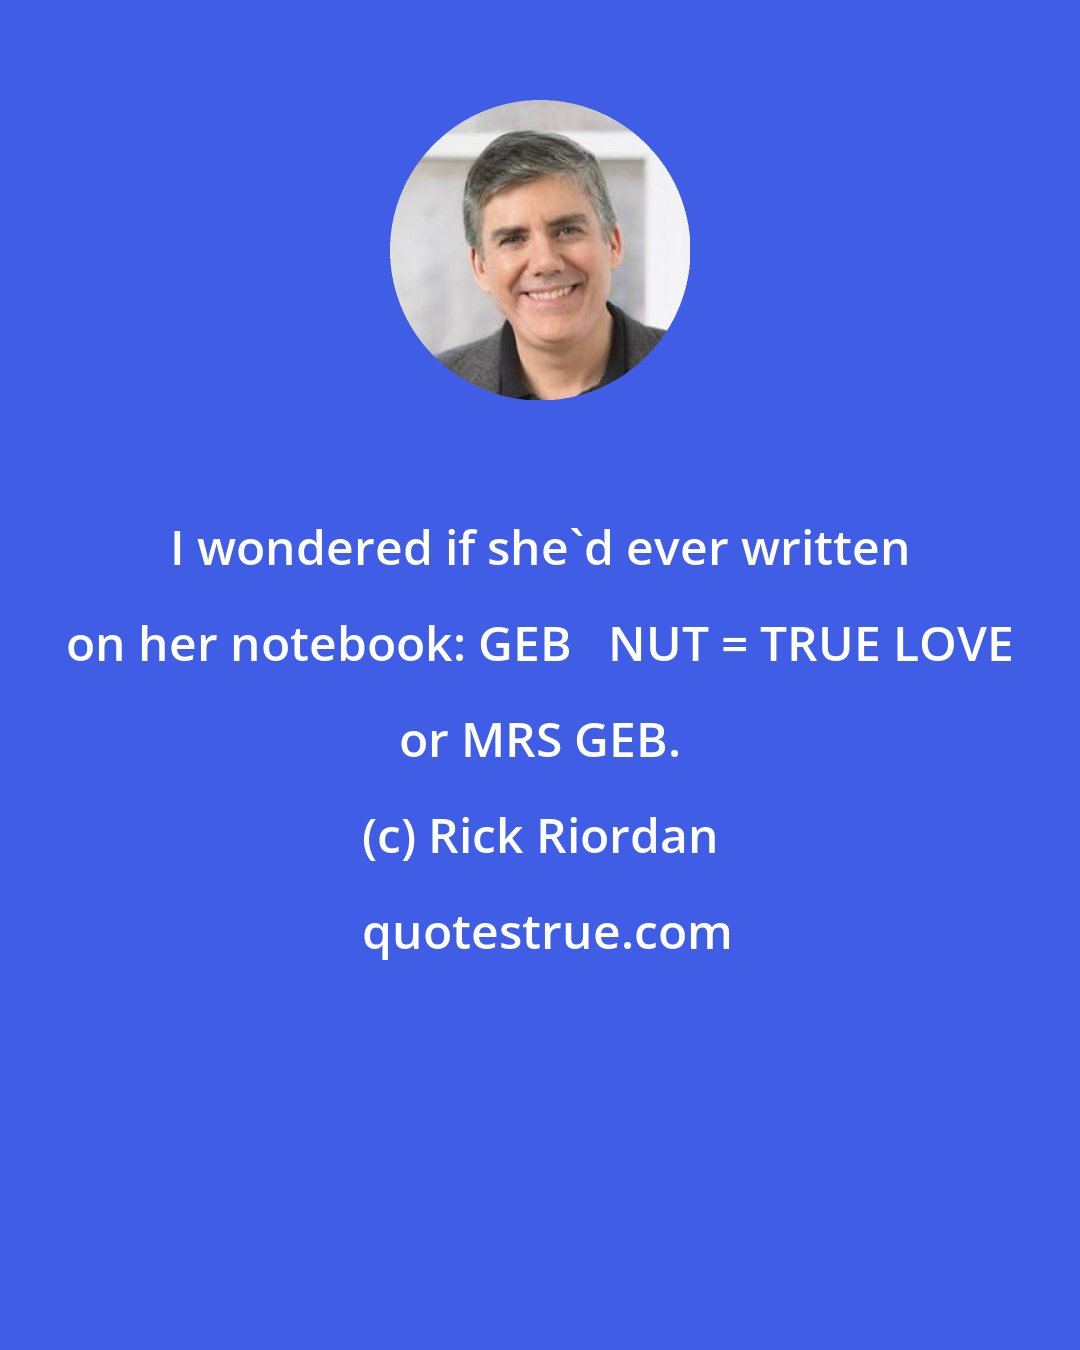 Rick Riordan: I wondered if she'd ever written on her notebook: GEB + NUT = TRUE LOVE or MRS GEB.